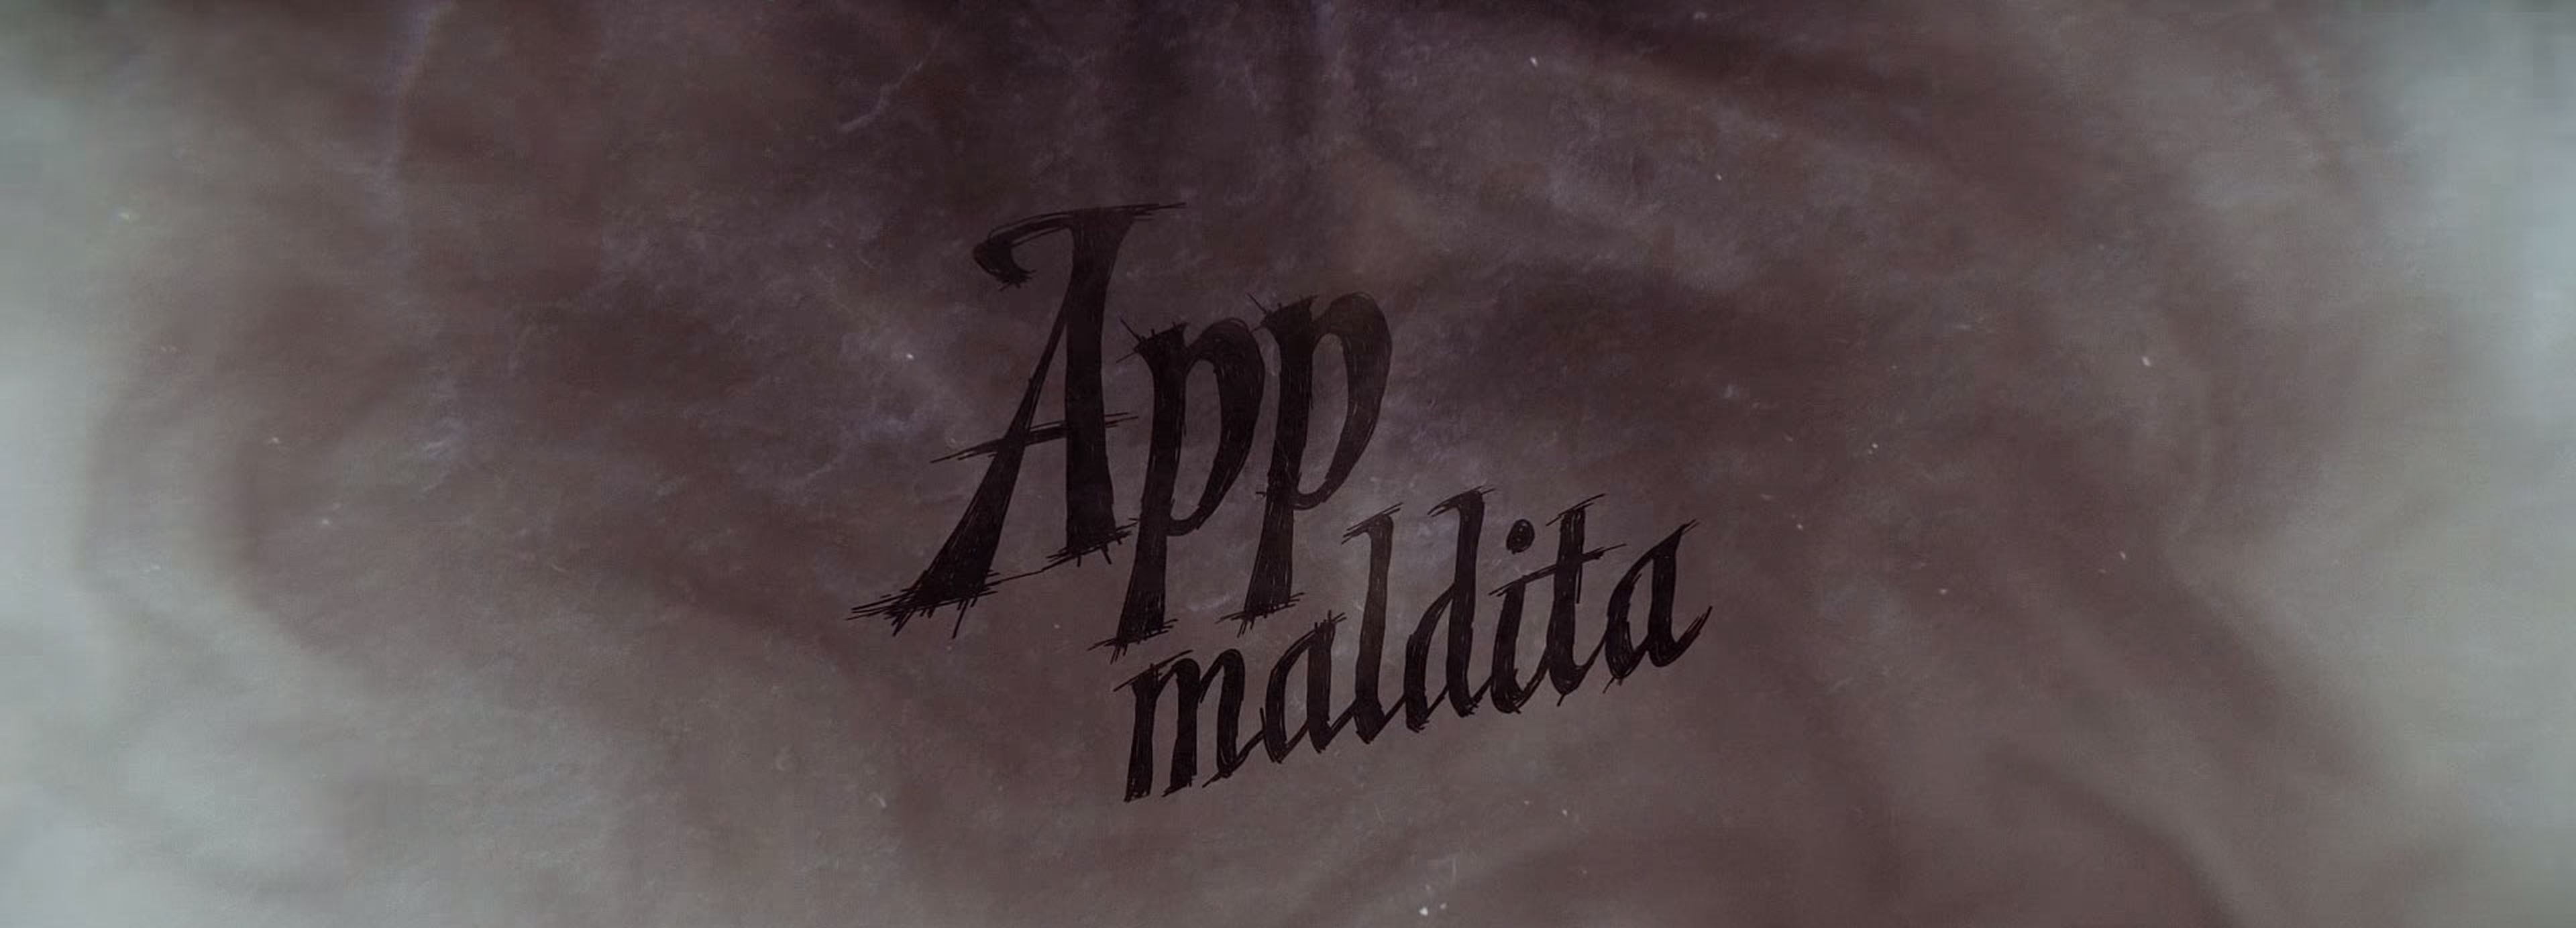 App Maldita